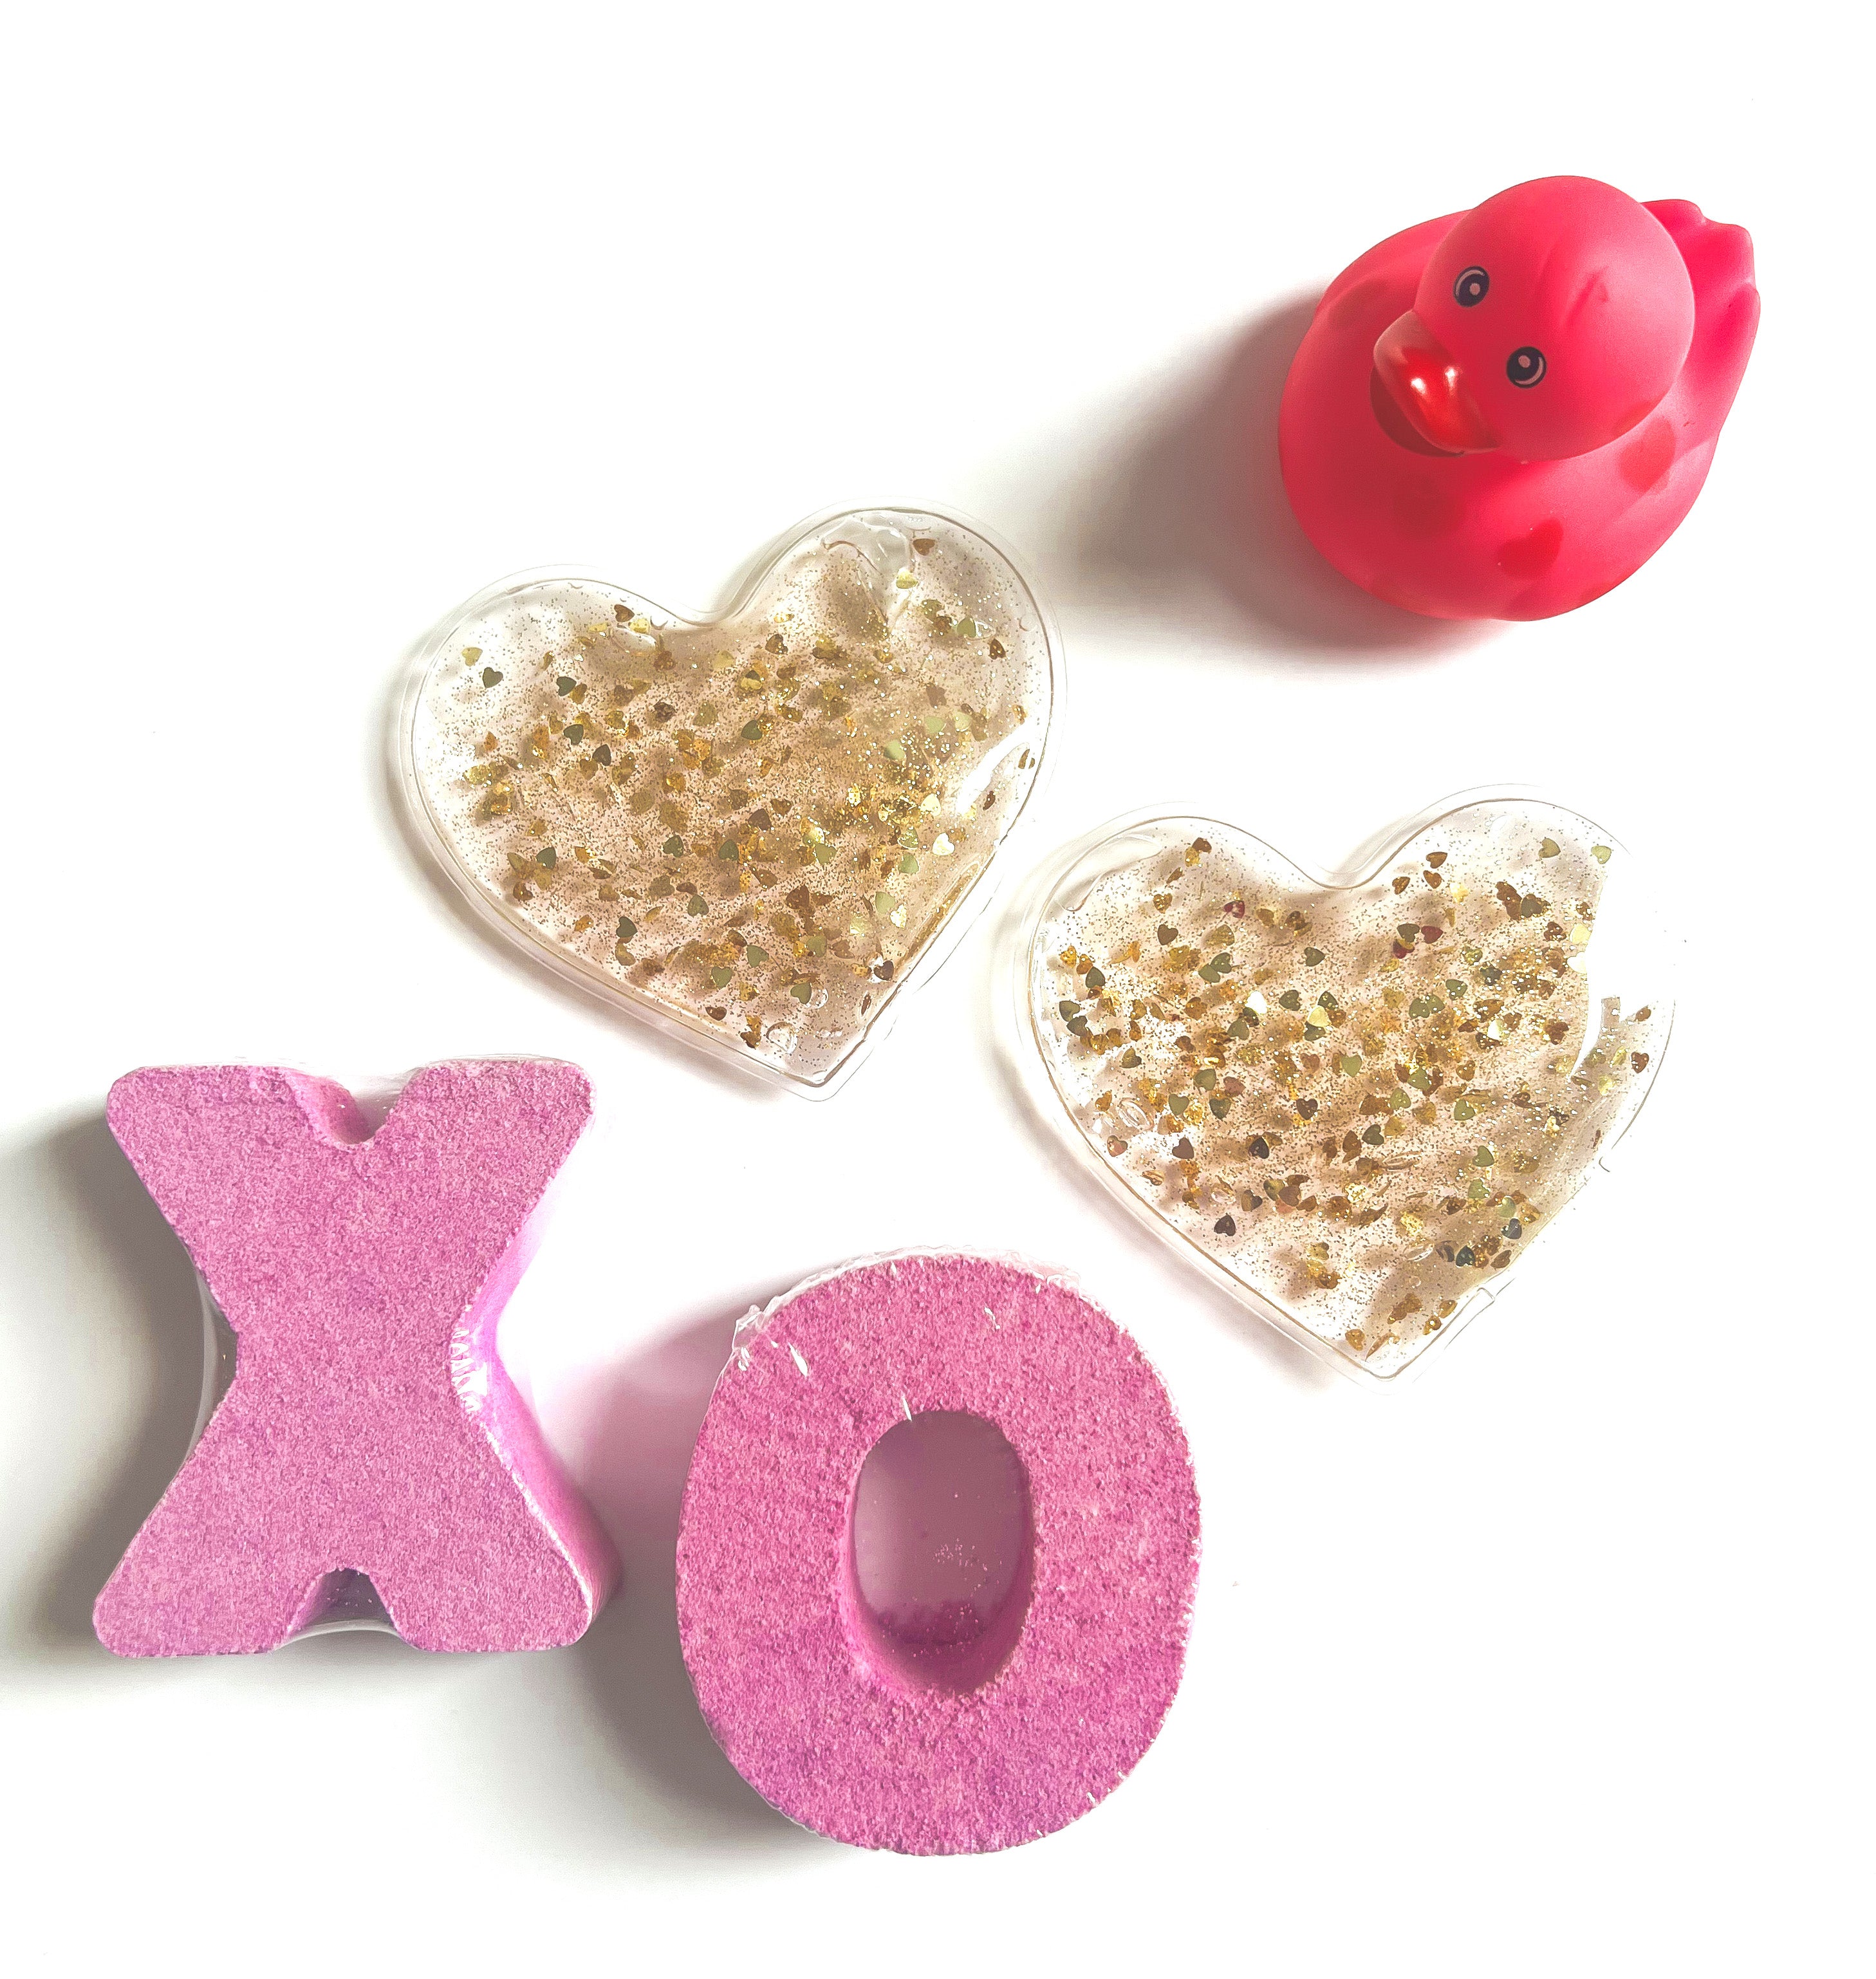 XoXo Valentine Pamper Yourself Gift Box